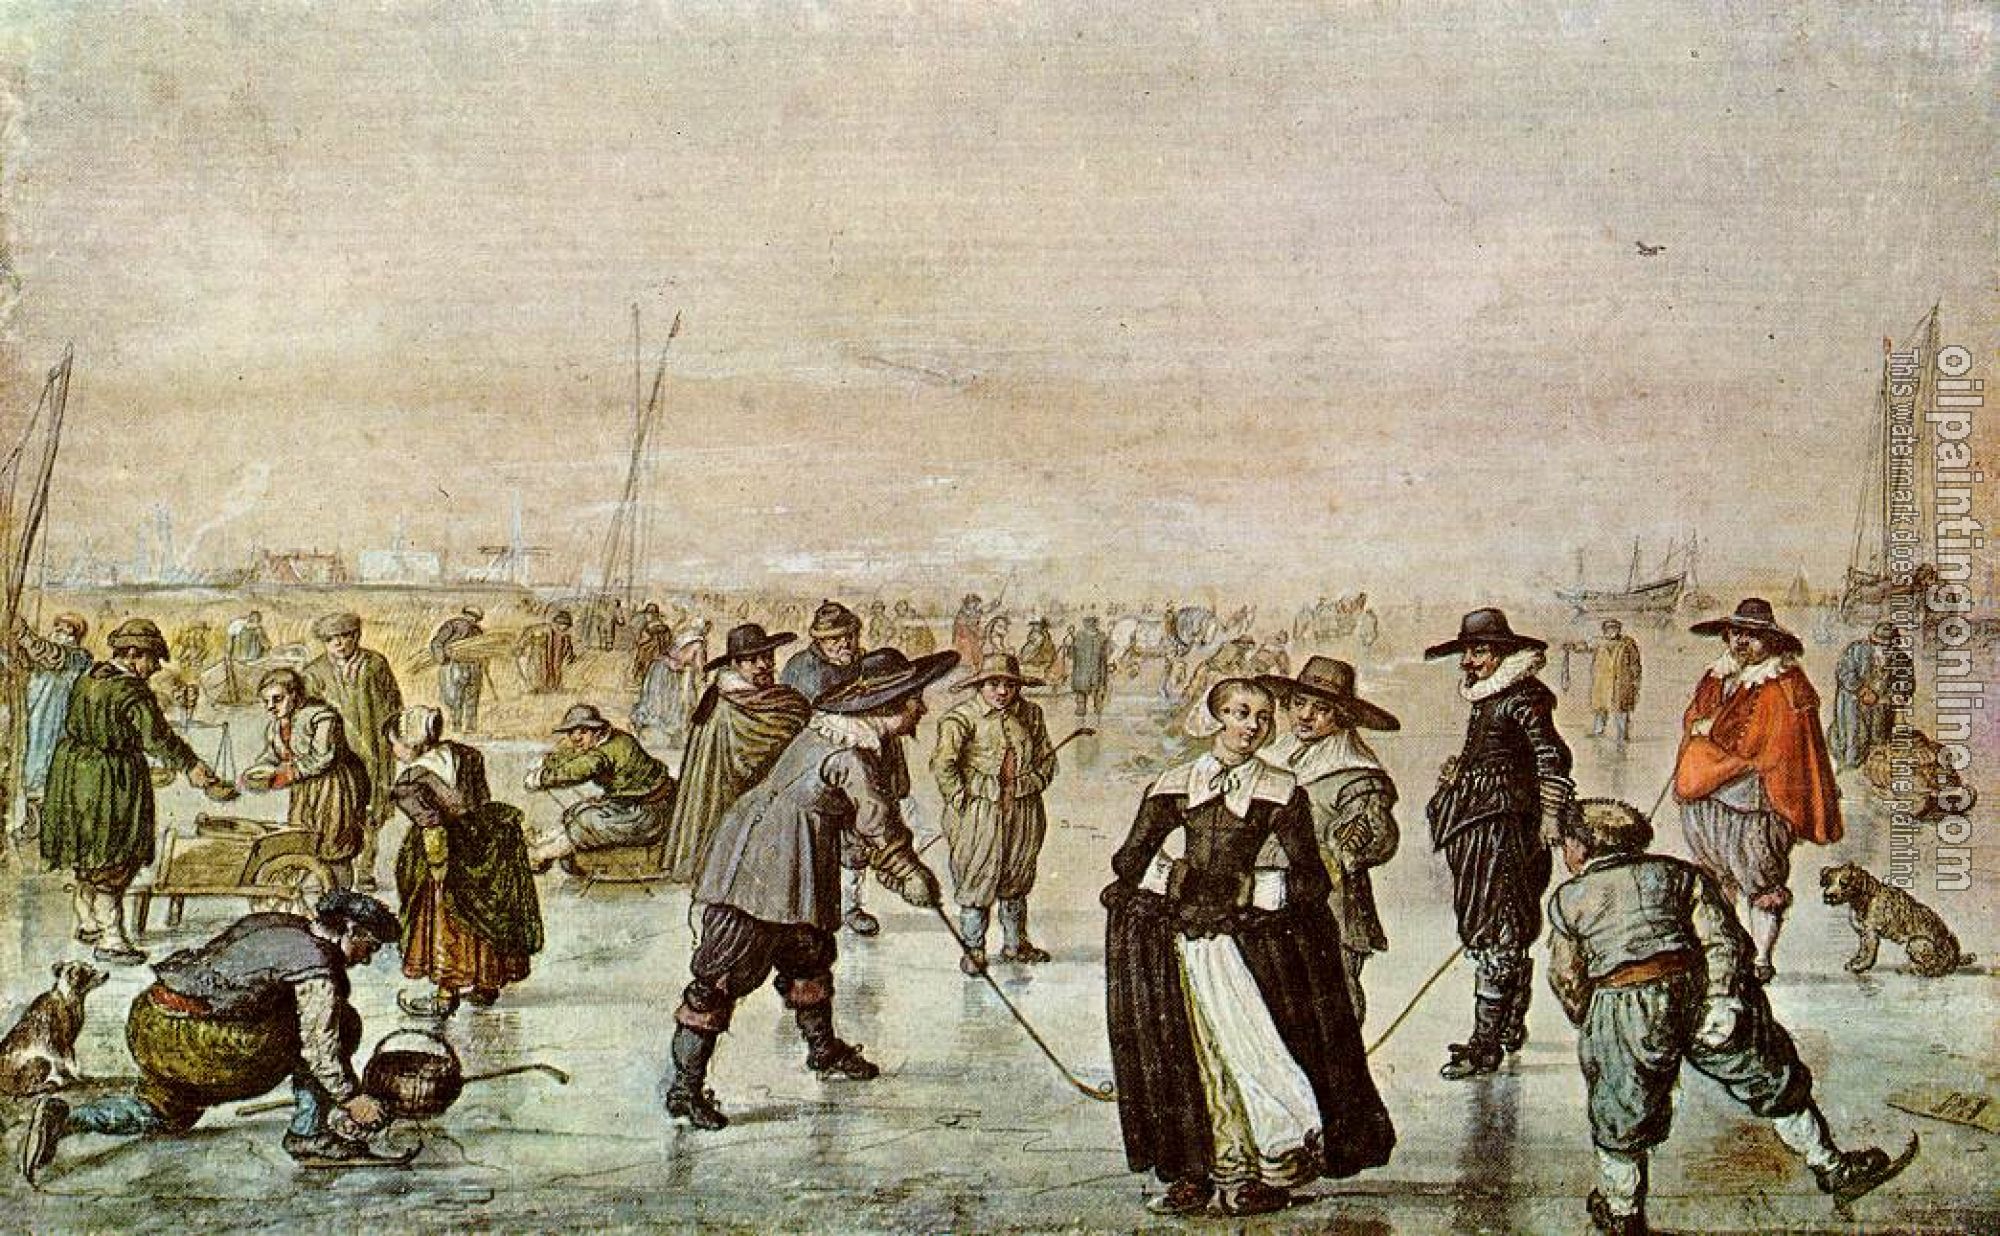 Avercamp, Hendrick - A Scene On The Ice